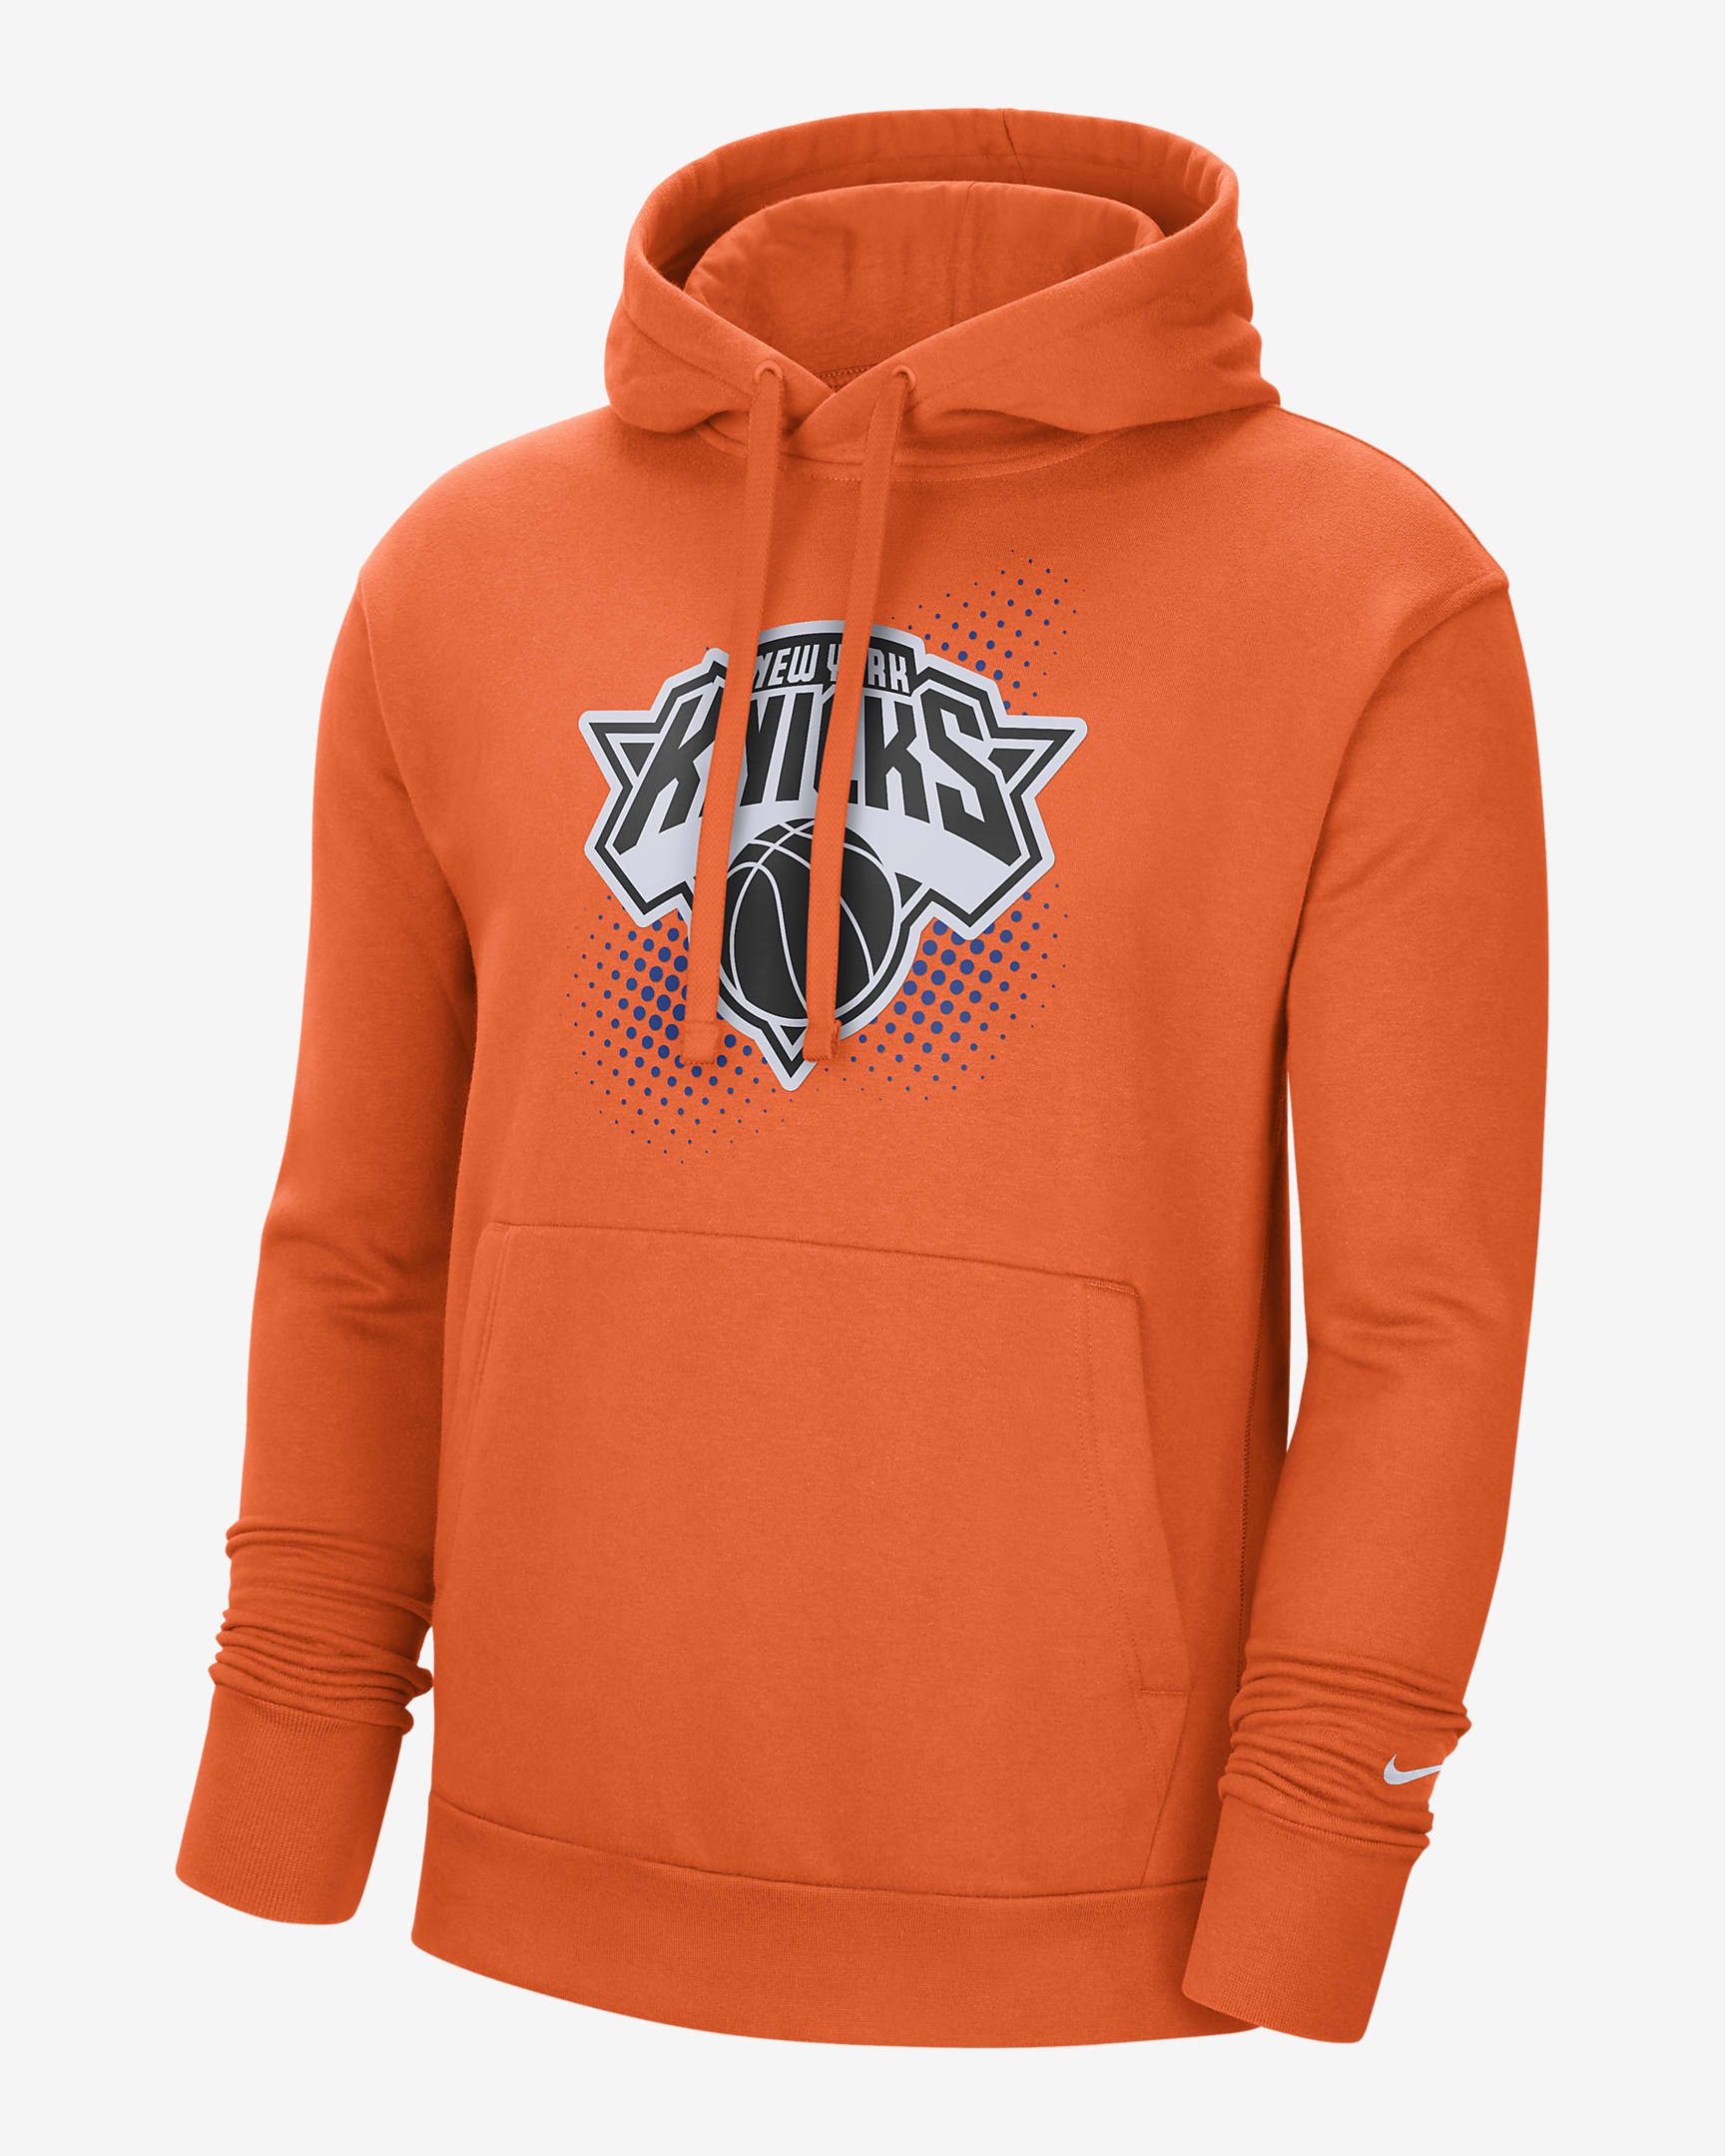 New York Knicks NBA hoodie